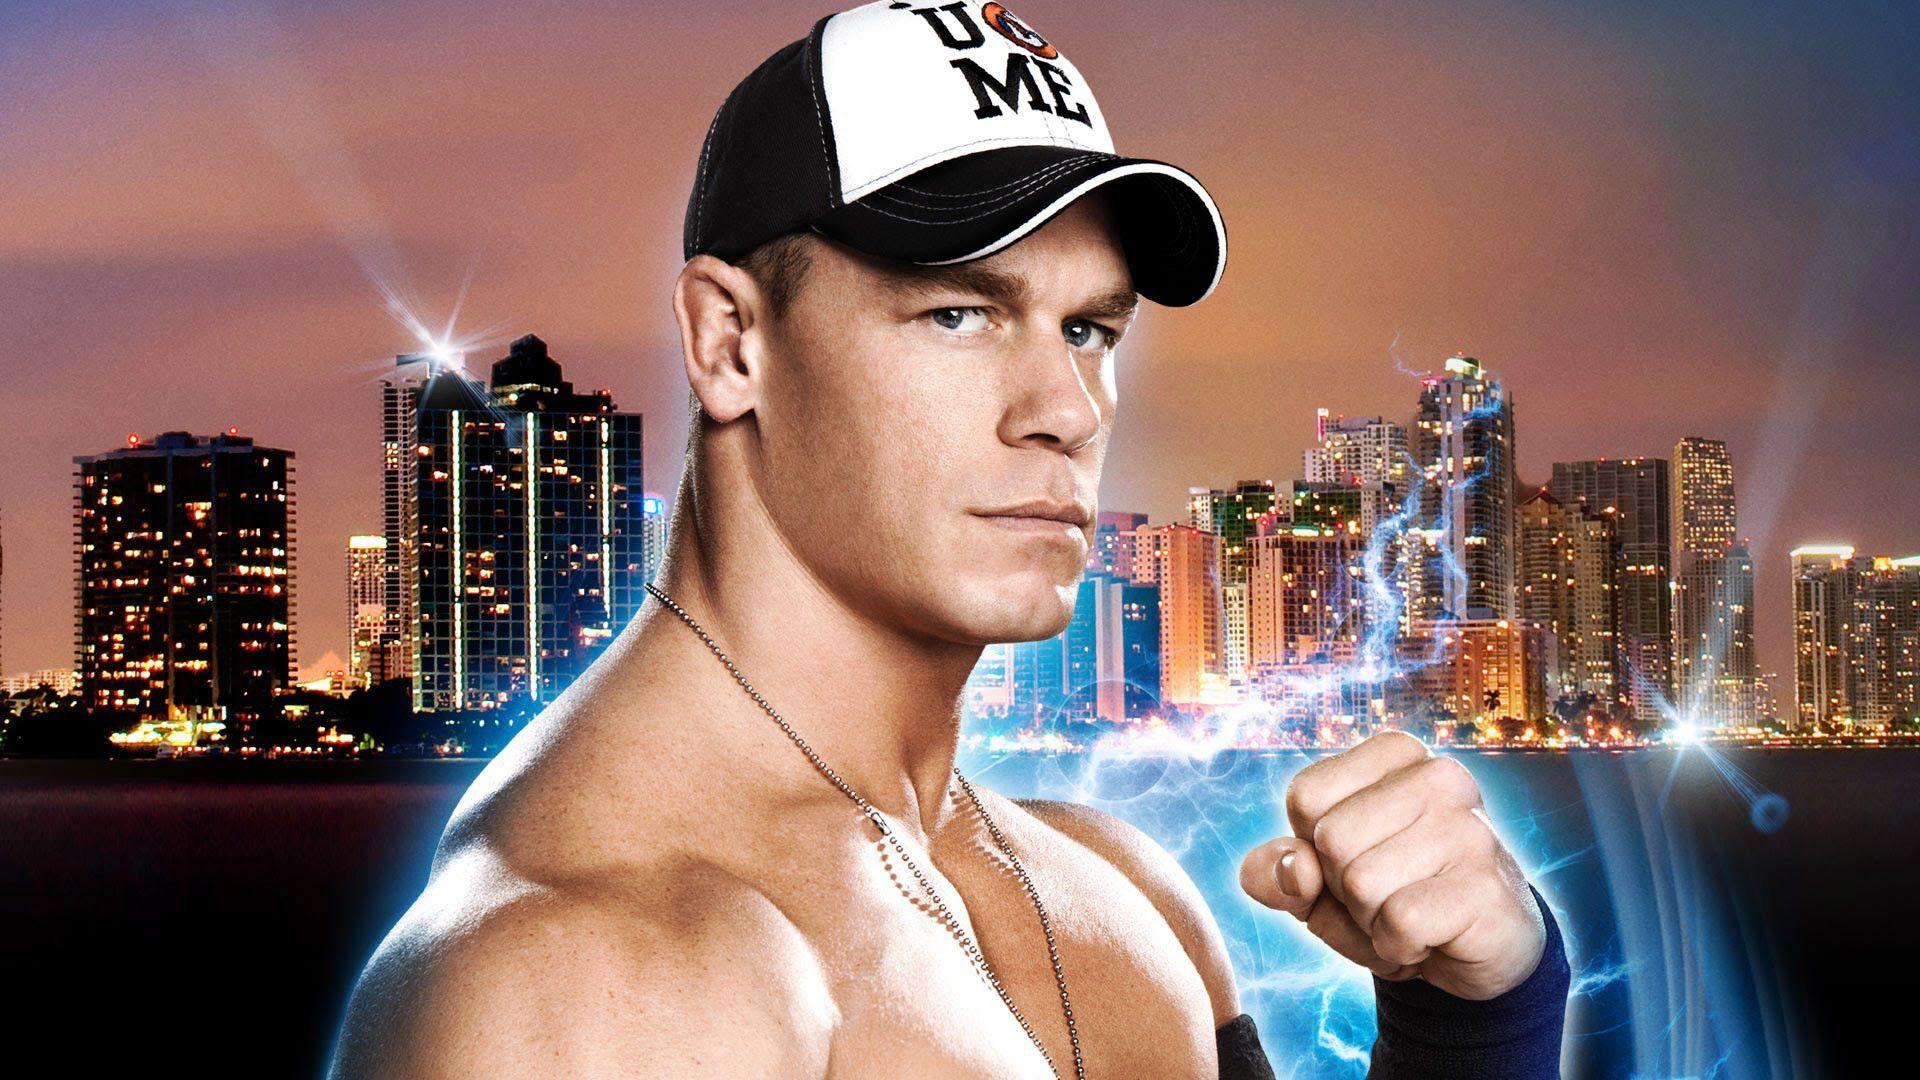 WWE John Cena Wallpaper 2017 HD